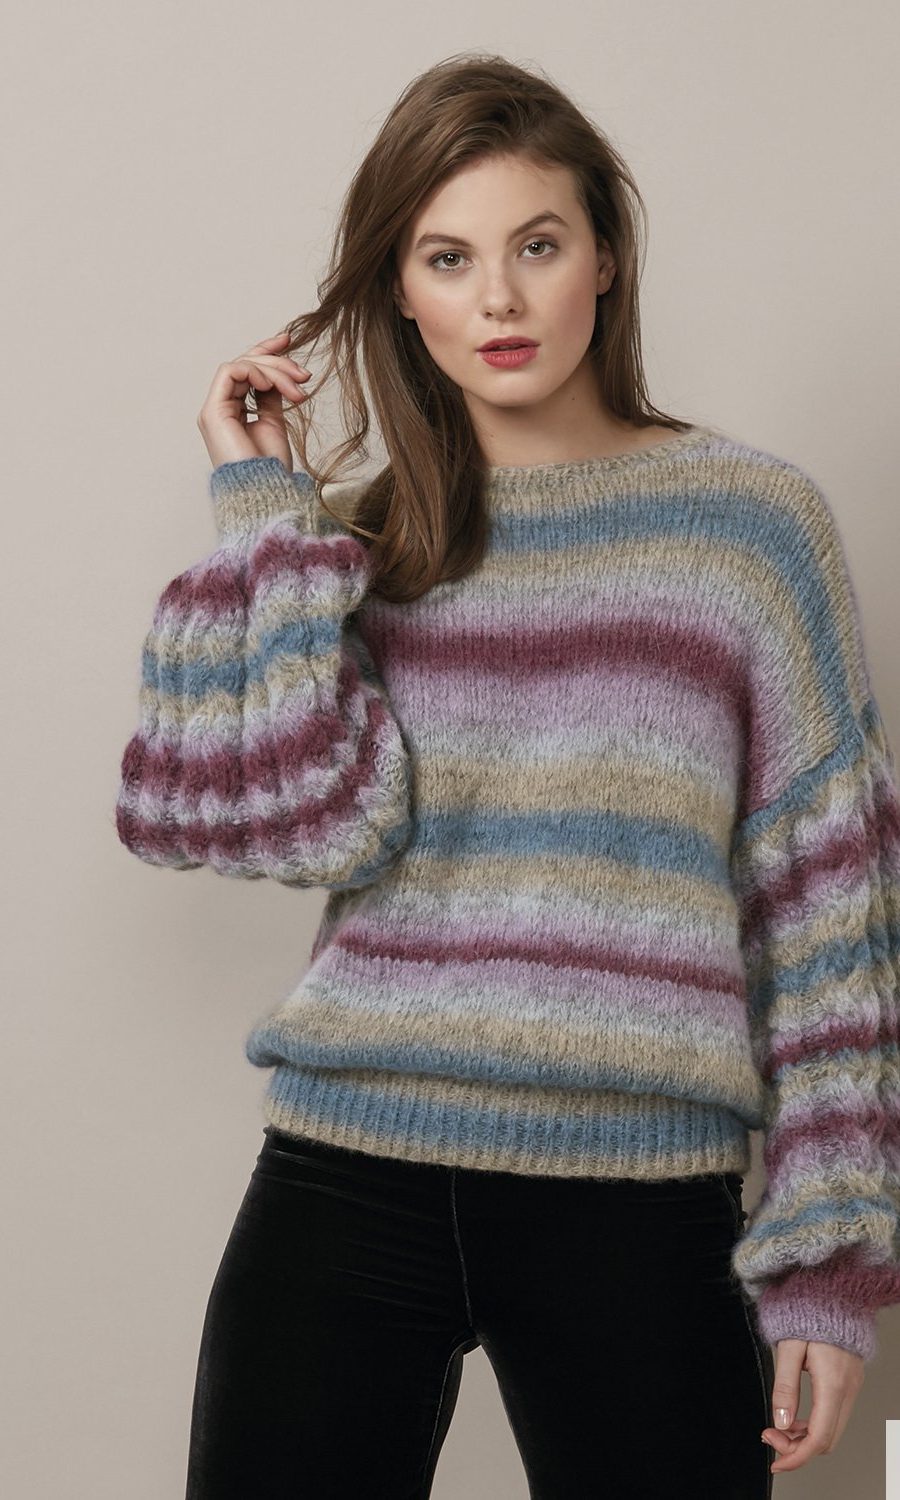 pattern-knit-crochet-woman-sweater-autumn-winter-katia-6136-31-g